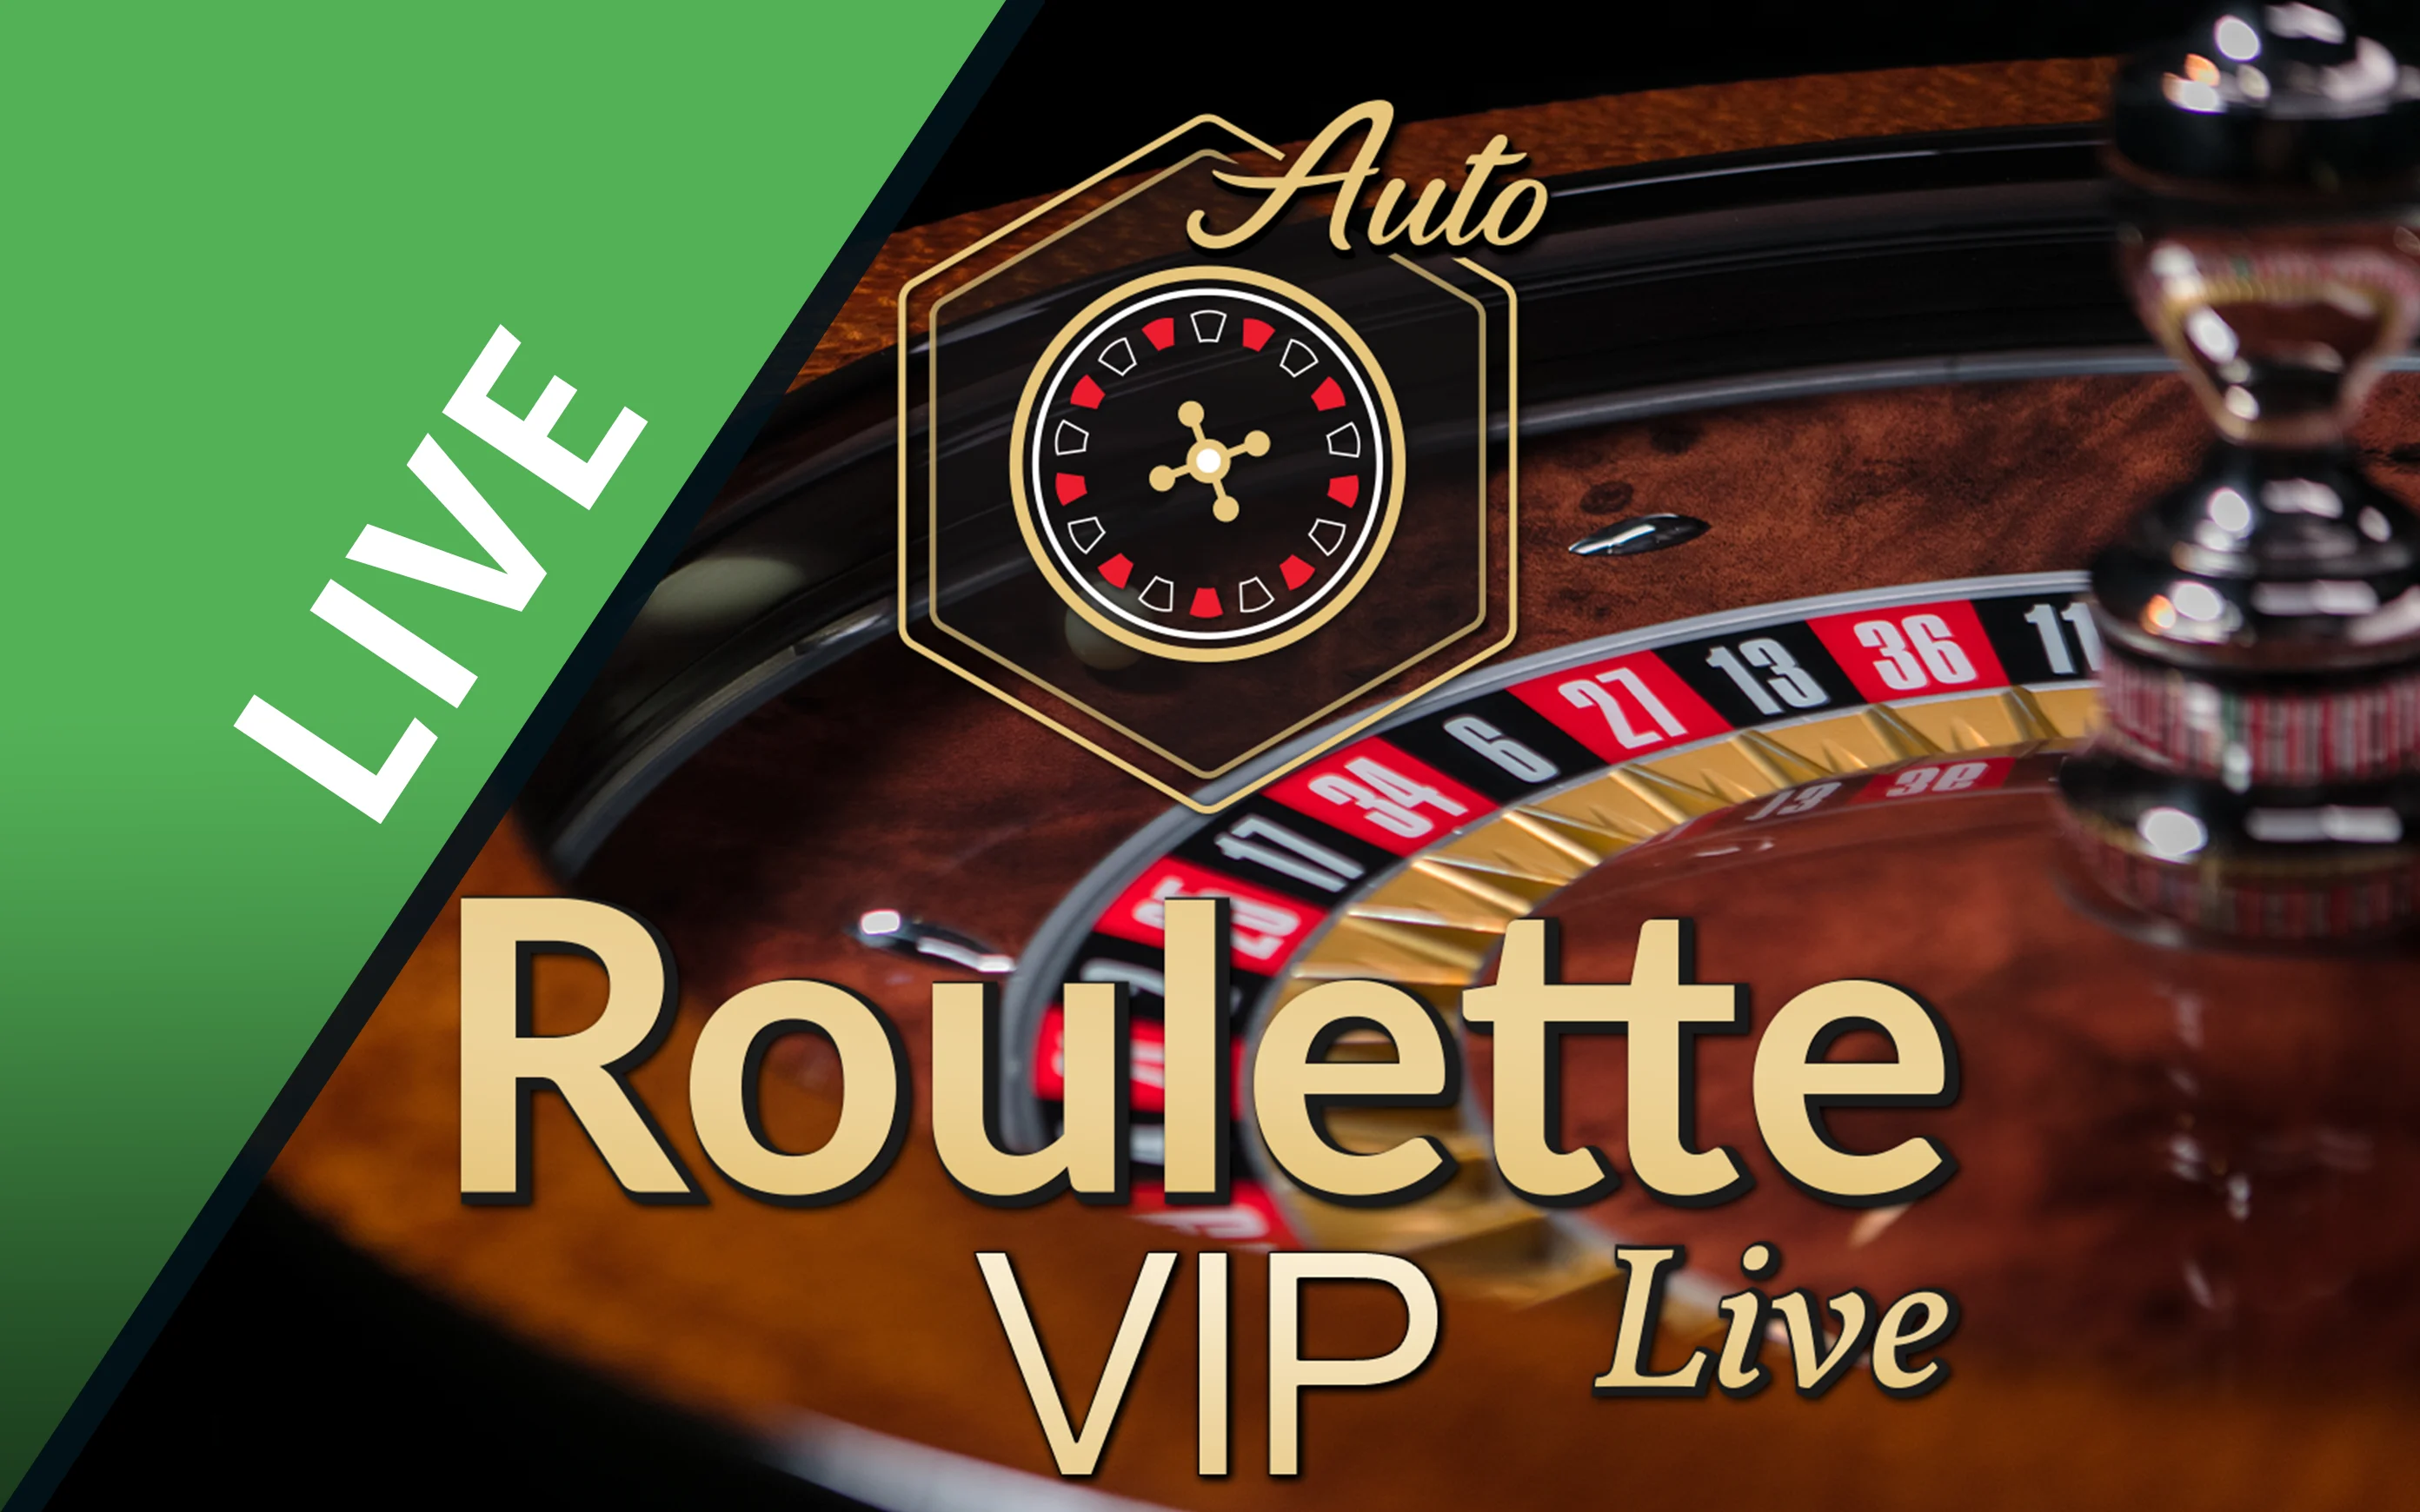 Play Auto Roulette VIP on Starcasino.be online casino